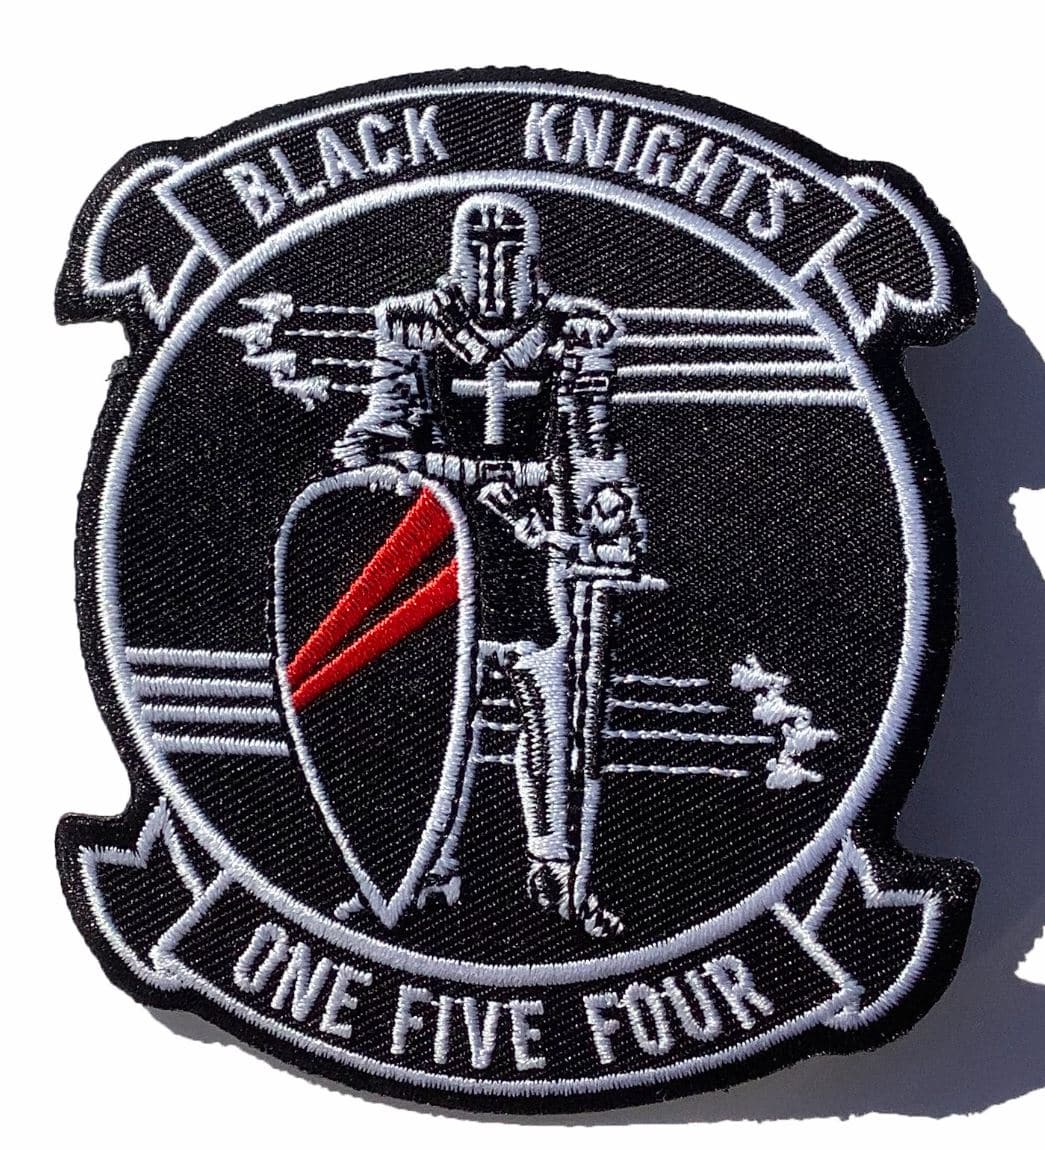 VF-154 Black Knights Patch